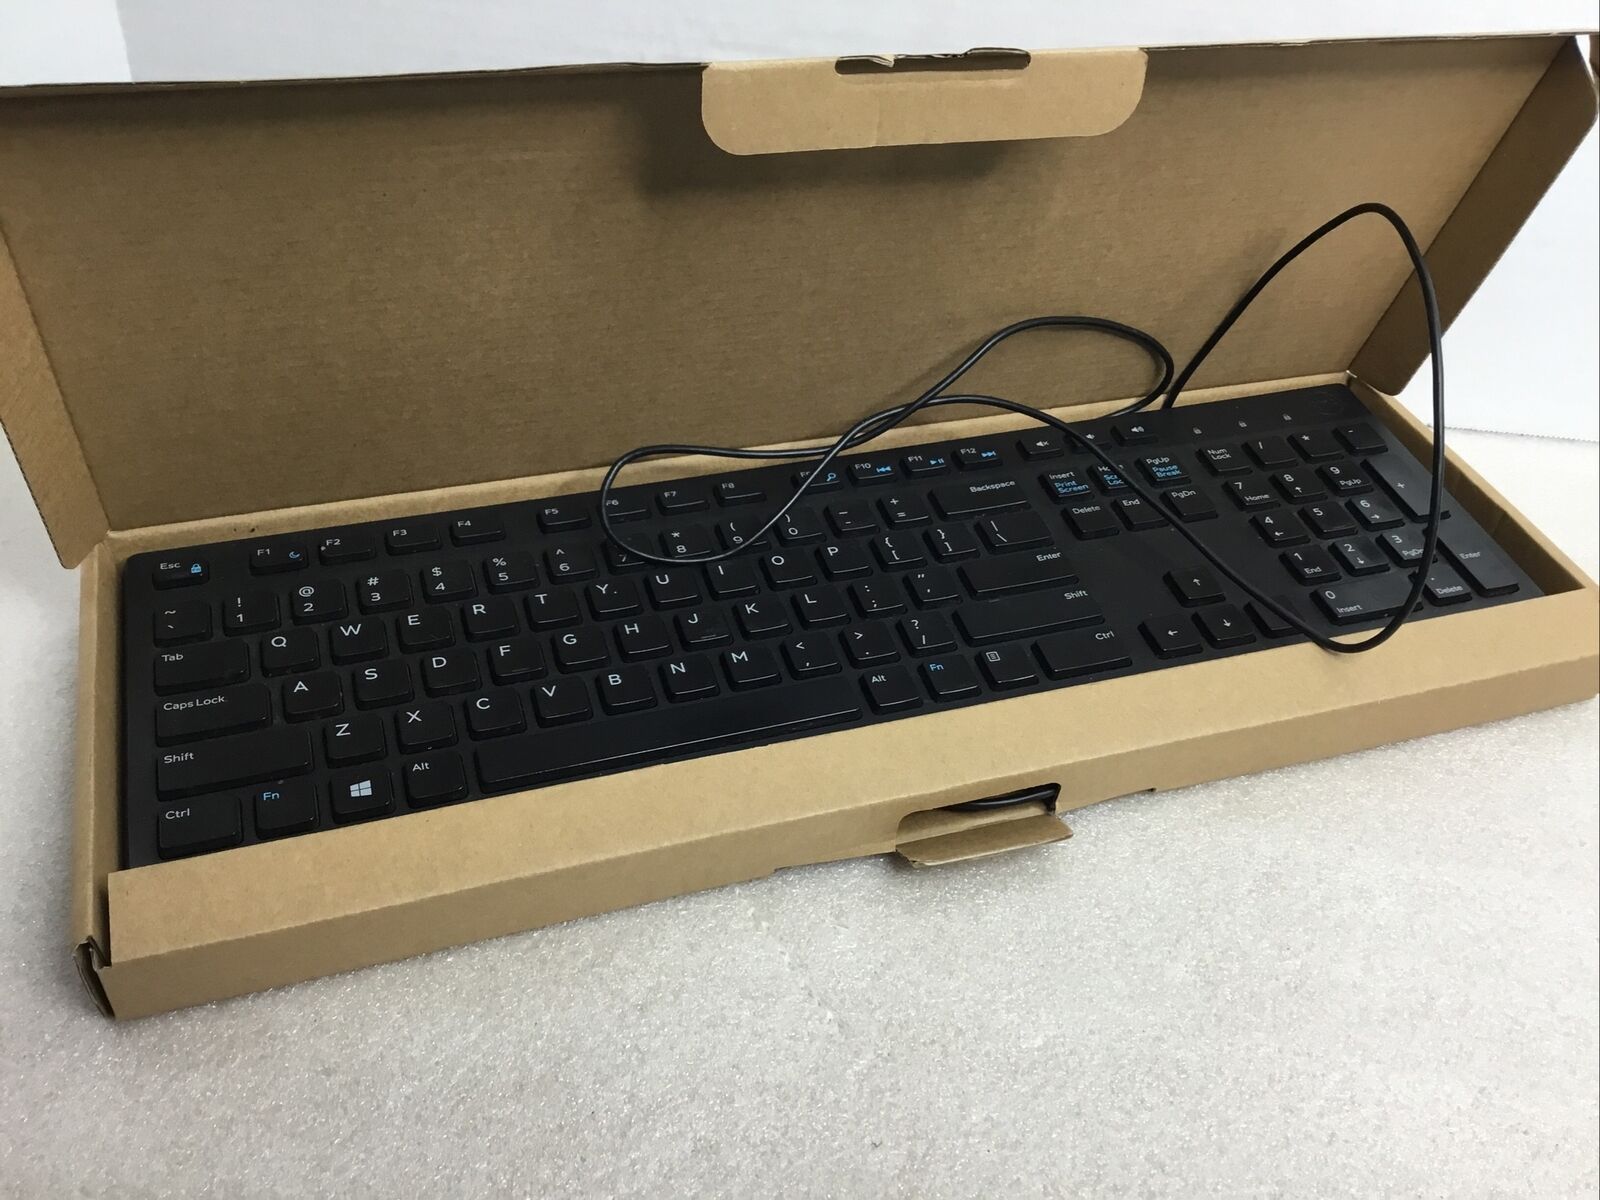 Dell 580-ADMT KB216 Wired Keyboard - Black for sale online | eBay